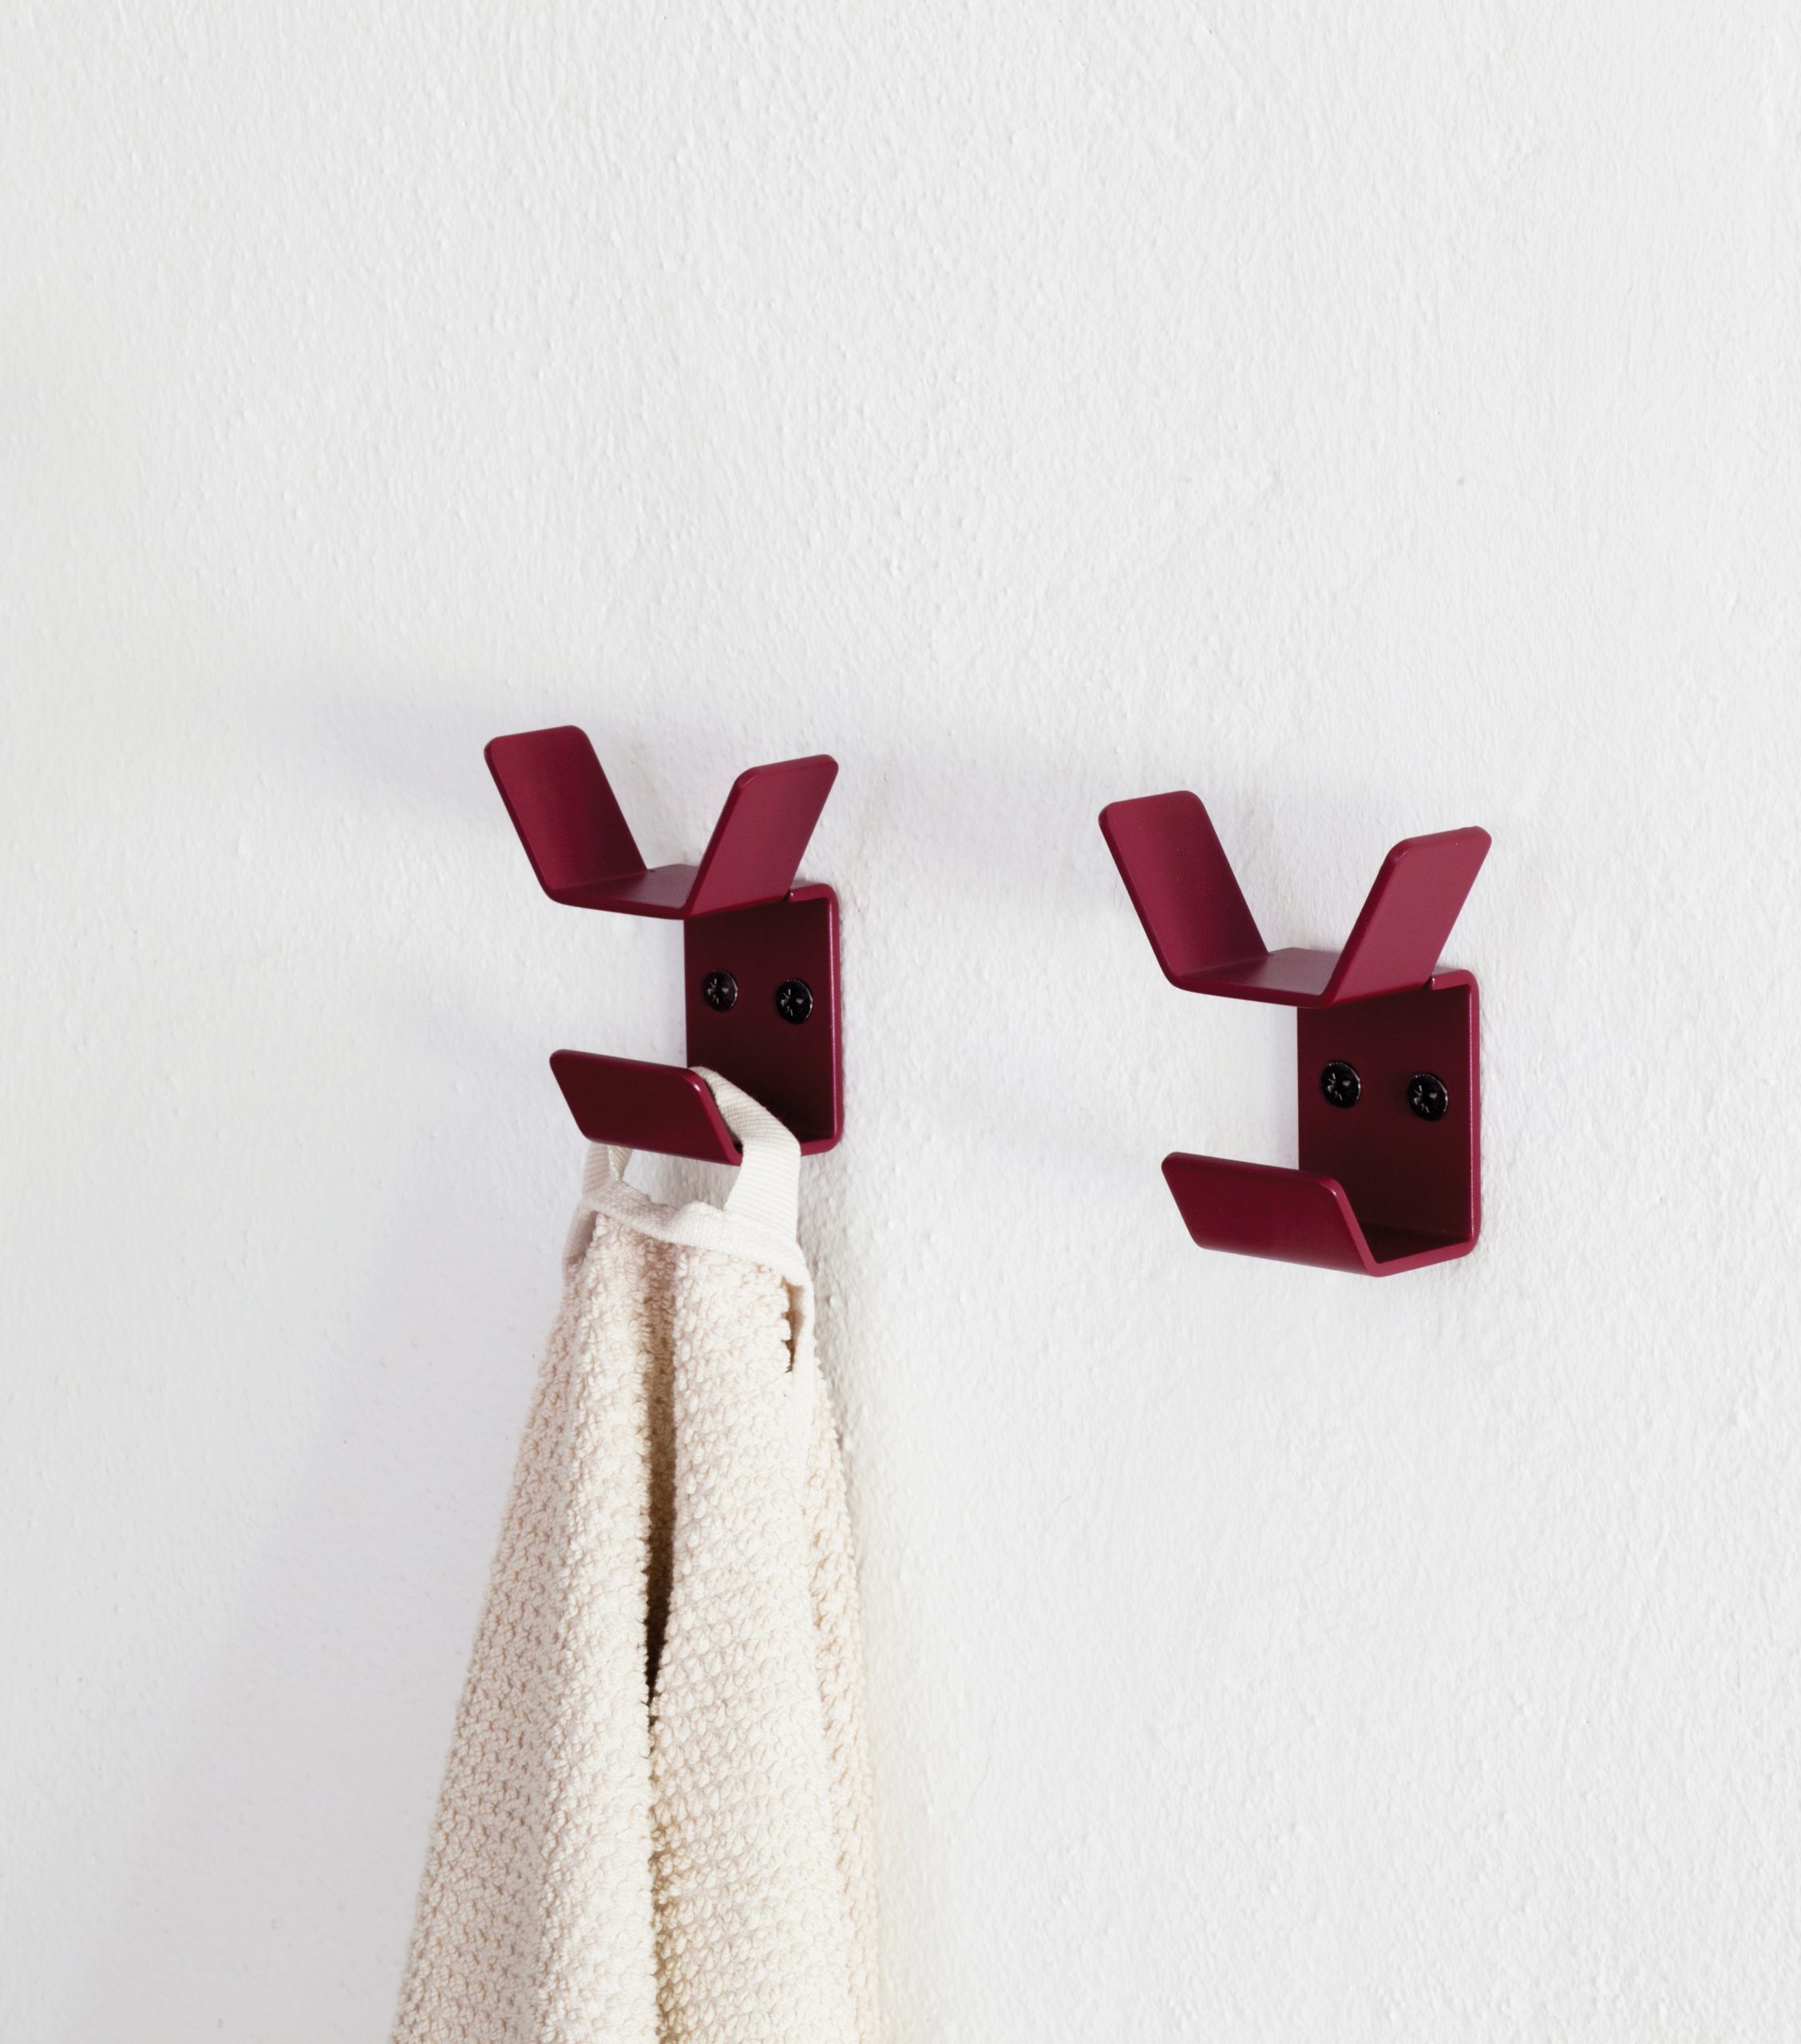 Qgini bathroom accessories by Debiasi Sandri for Antoniolupi